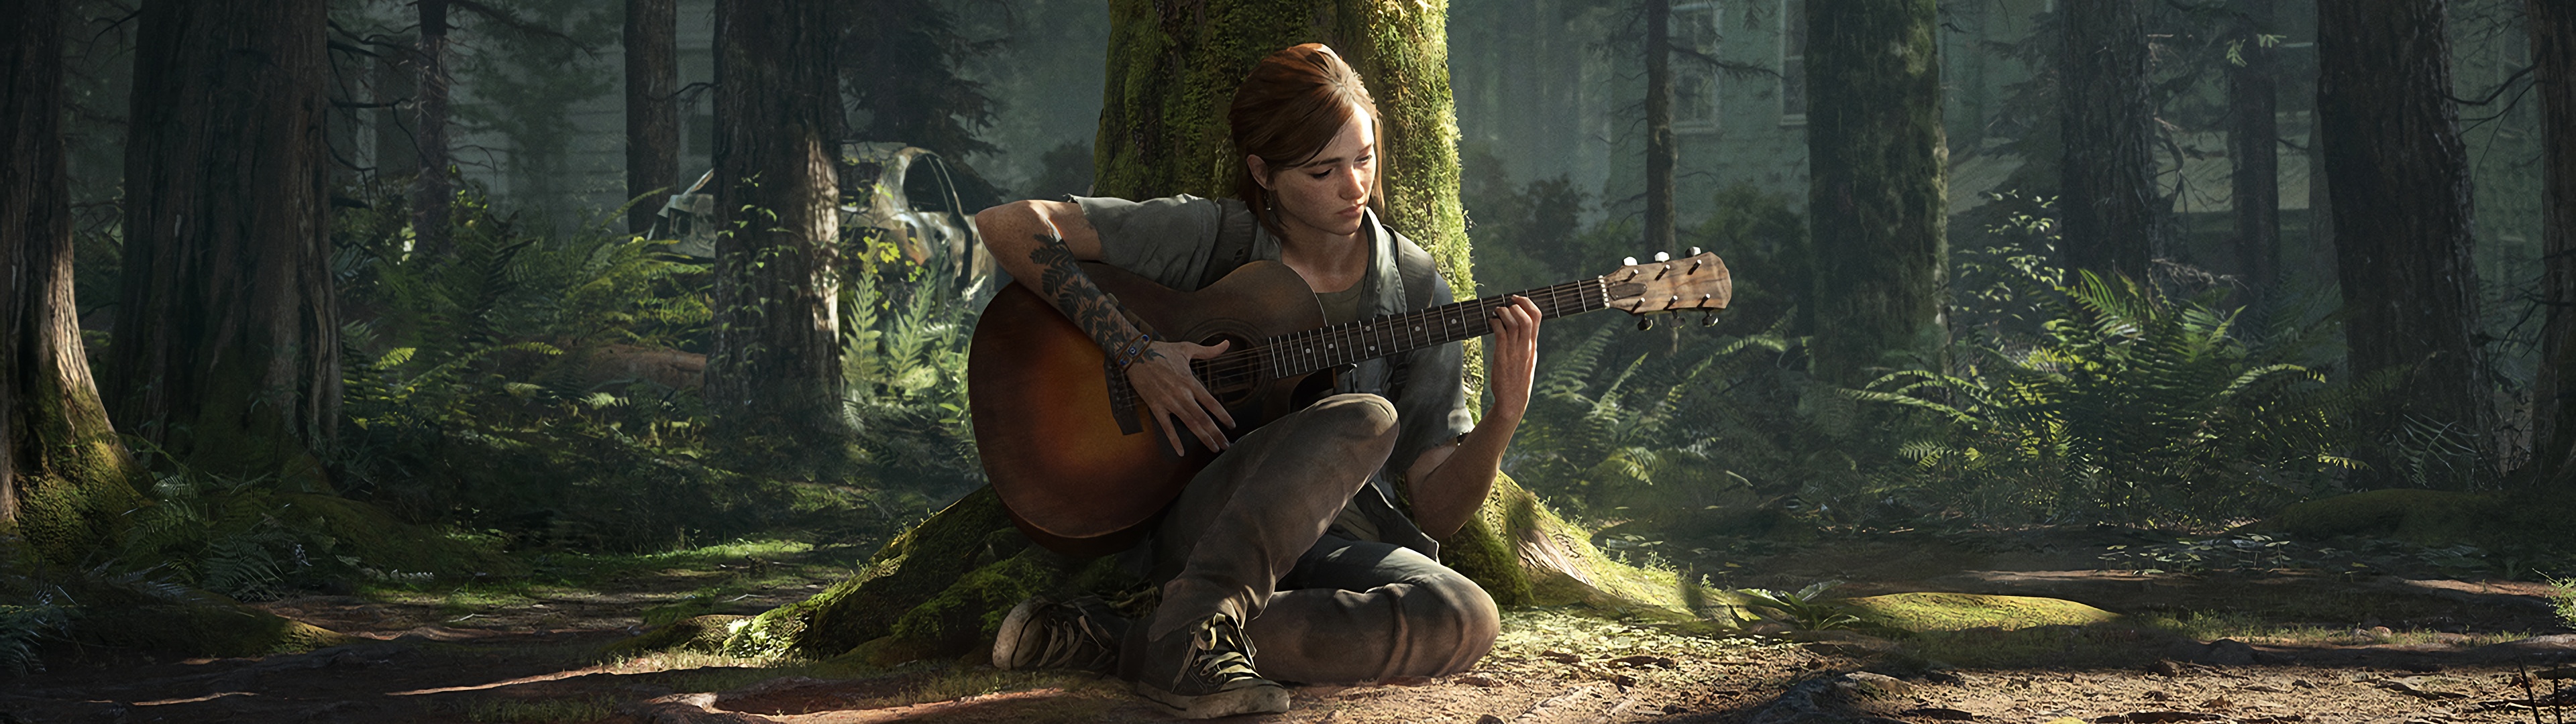 Ellie PlayStation 4 The Last of Us 2 the last of us part II #1080P  #wallpaper #hdwallpaper #desktop